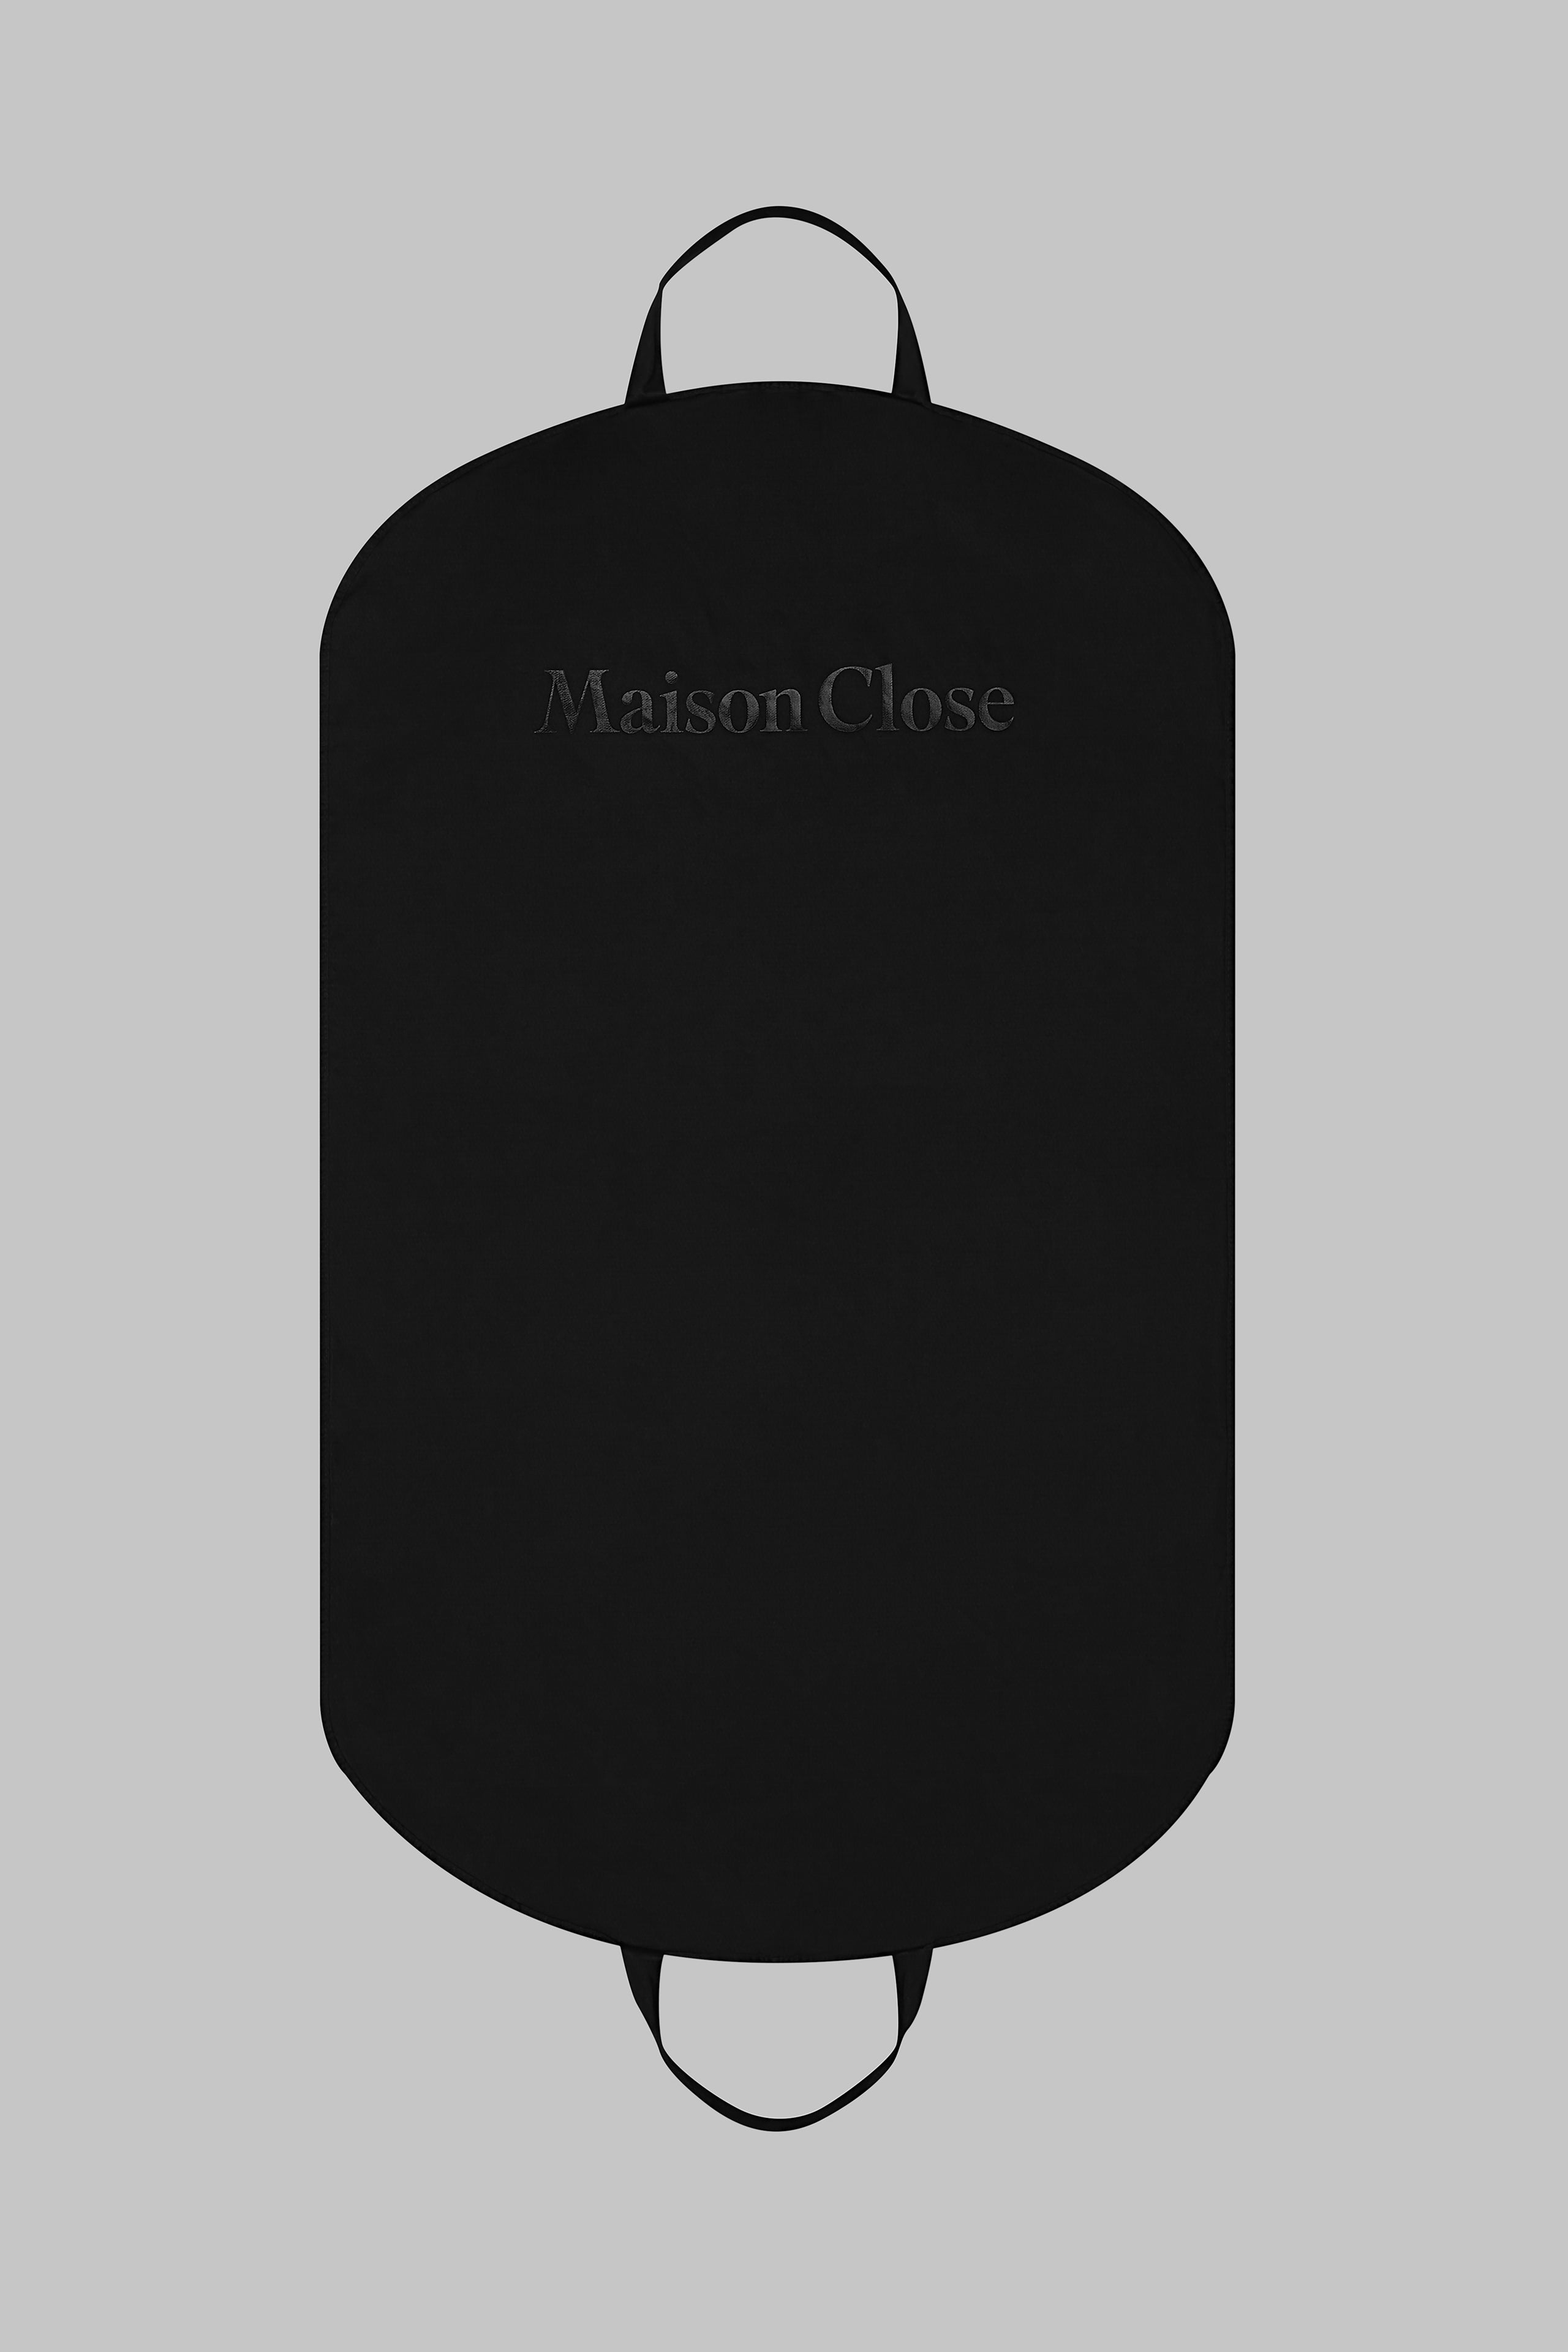 Maison Close garment cover